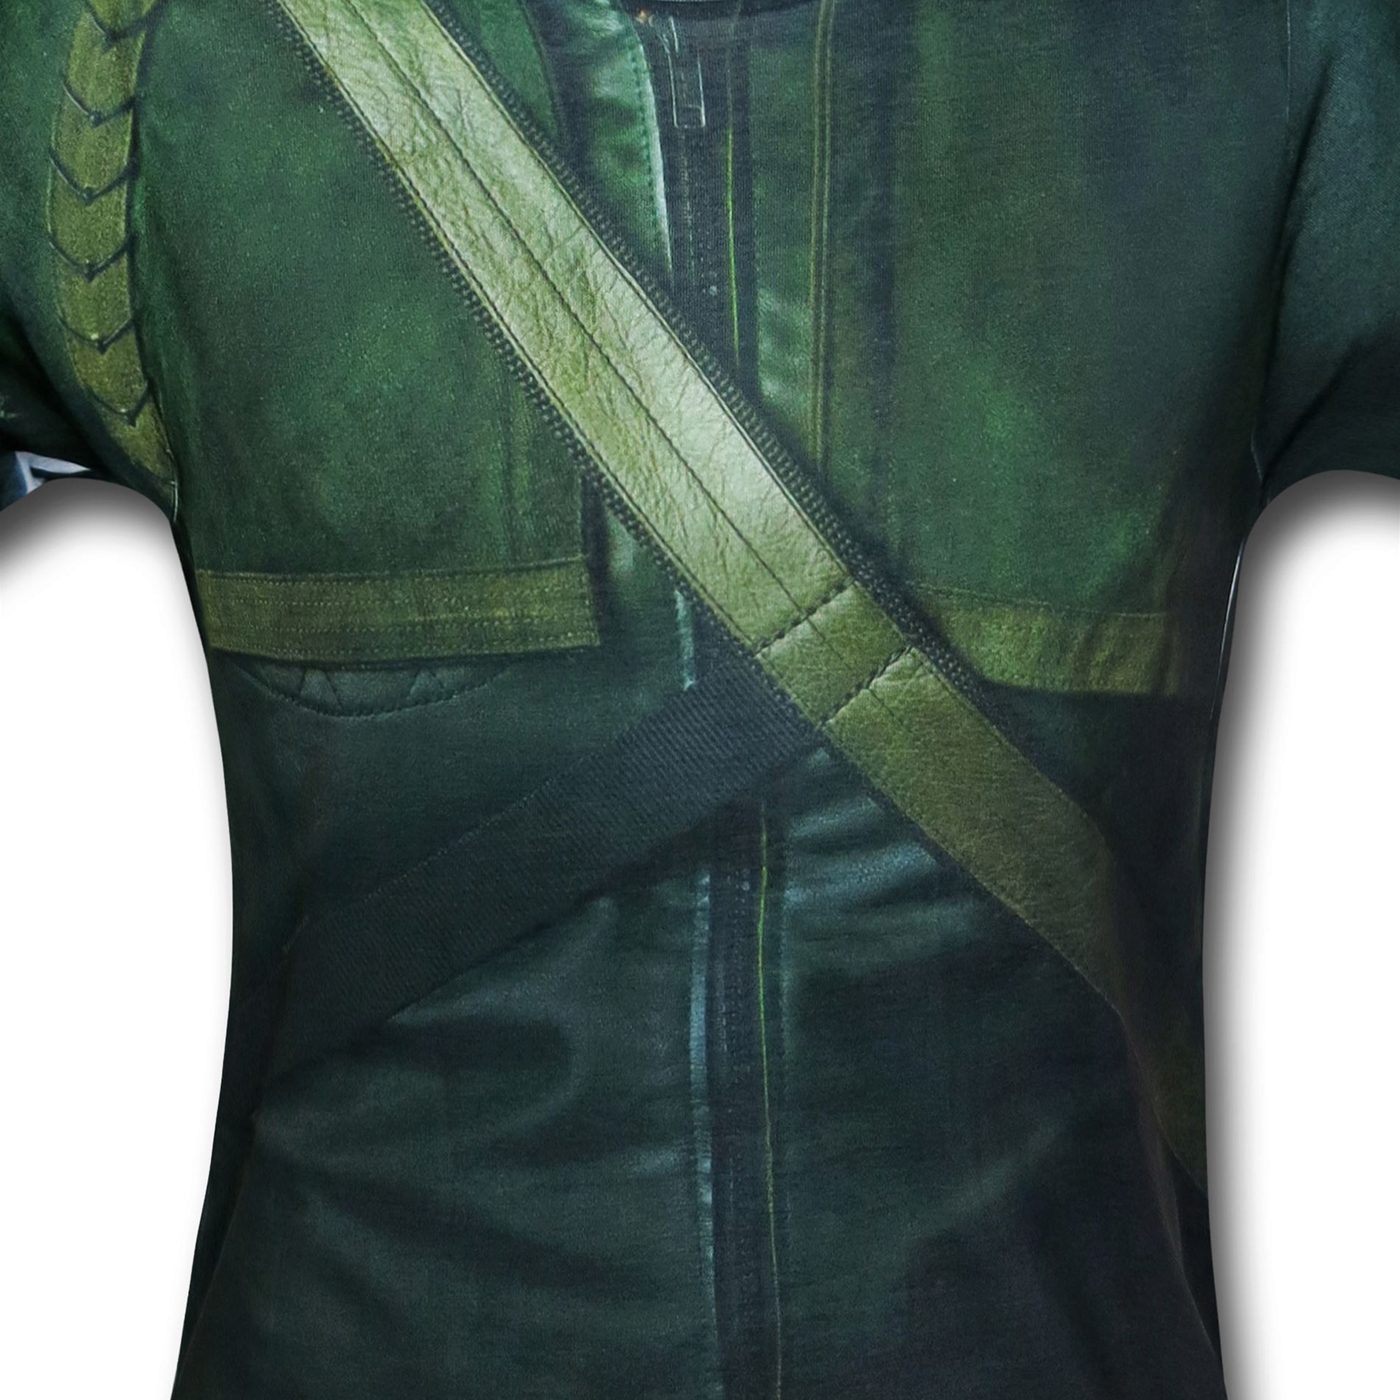 Arrow TV Sublimated Costume T-Shirt